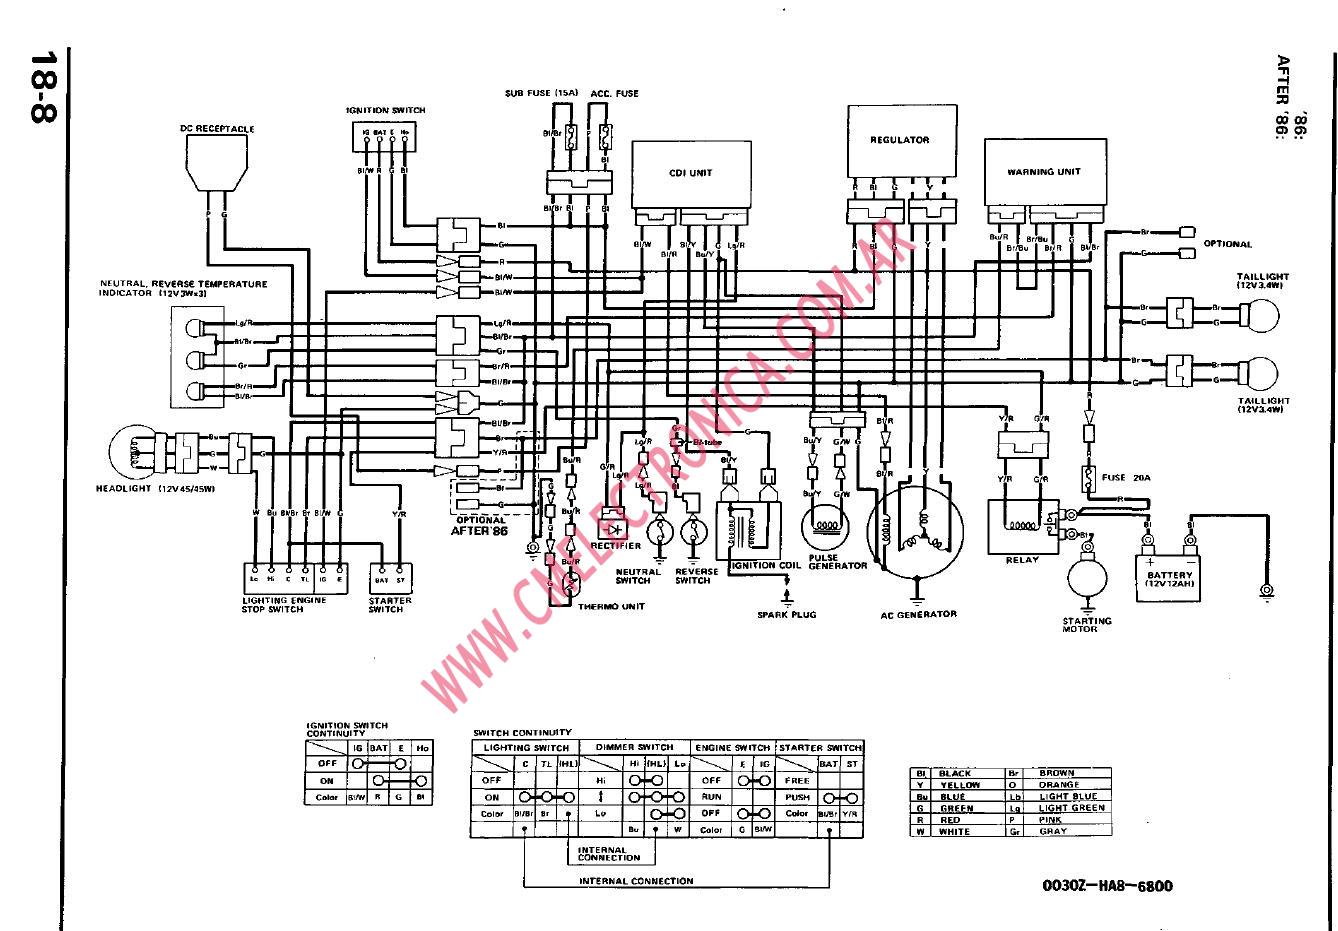 Trx450r Wiring Diagram - Wiring Diagram Pictures